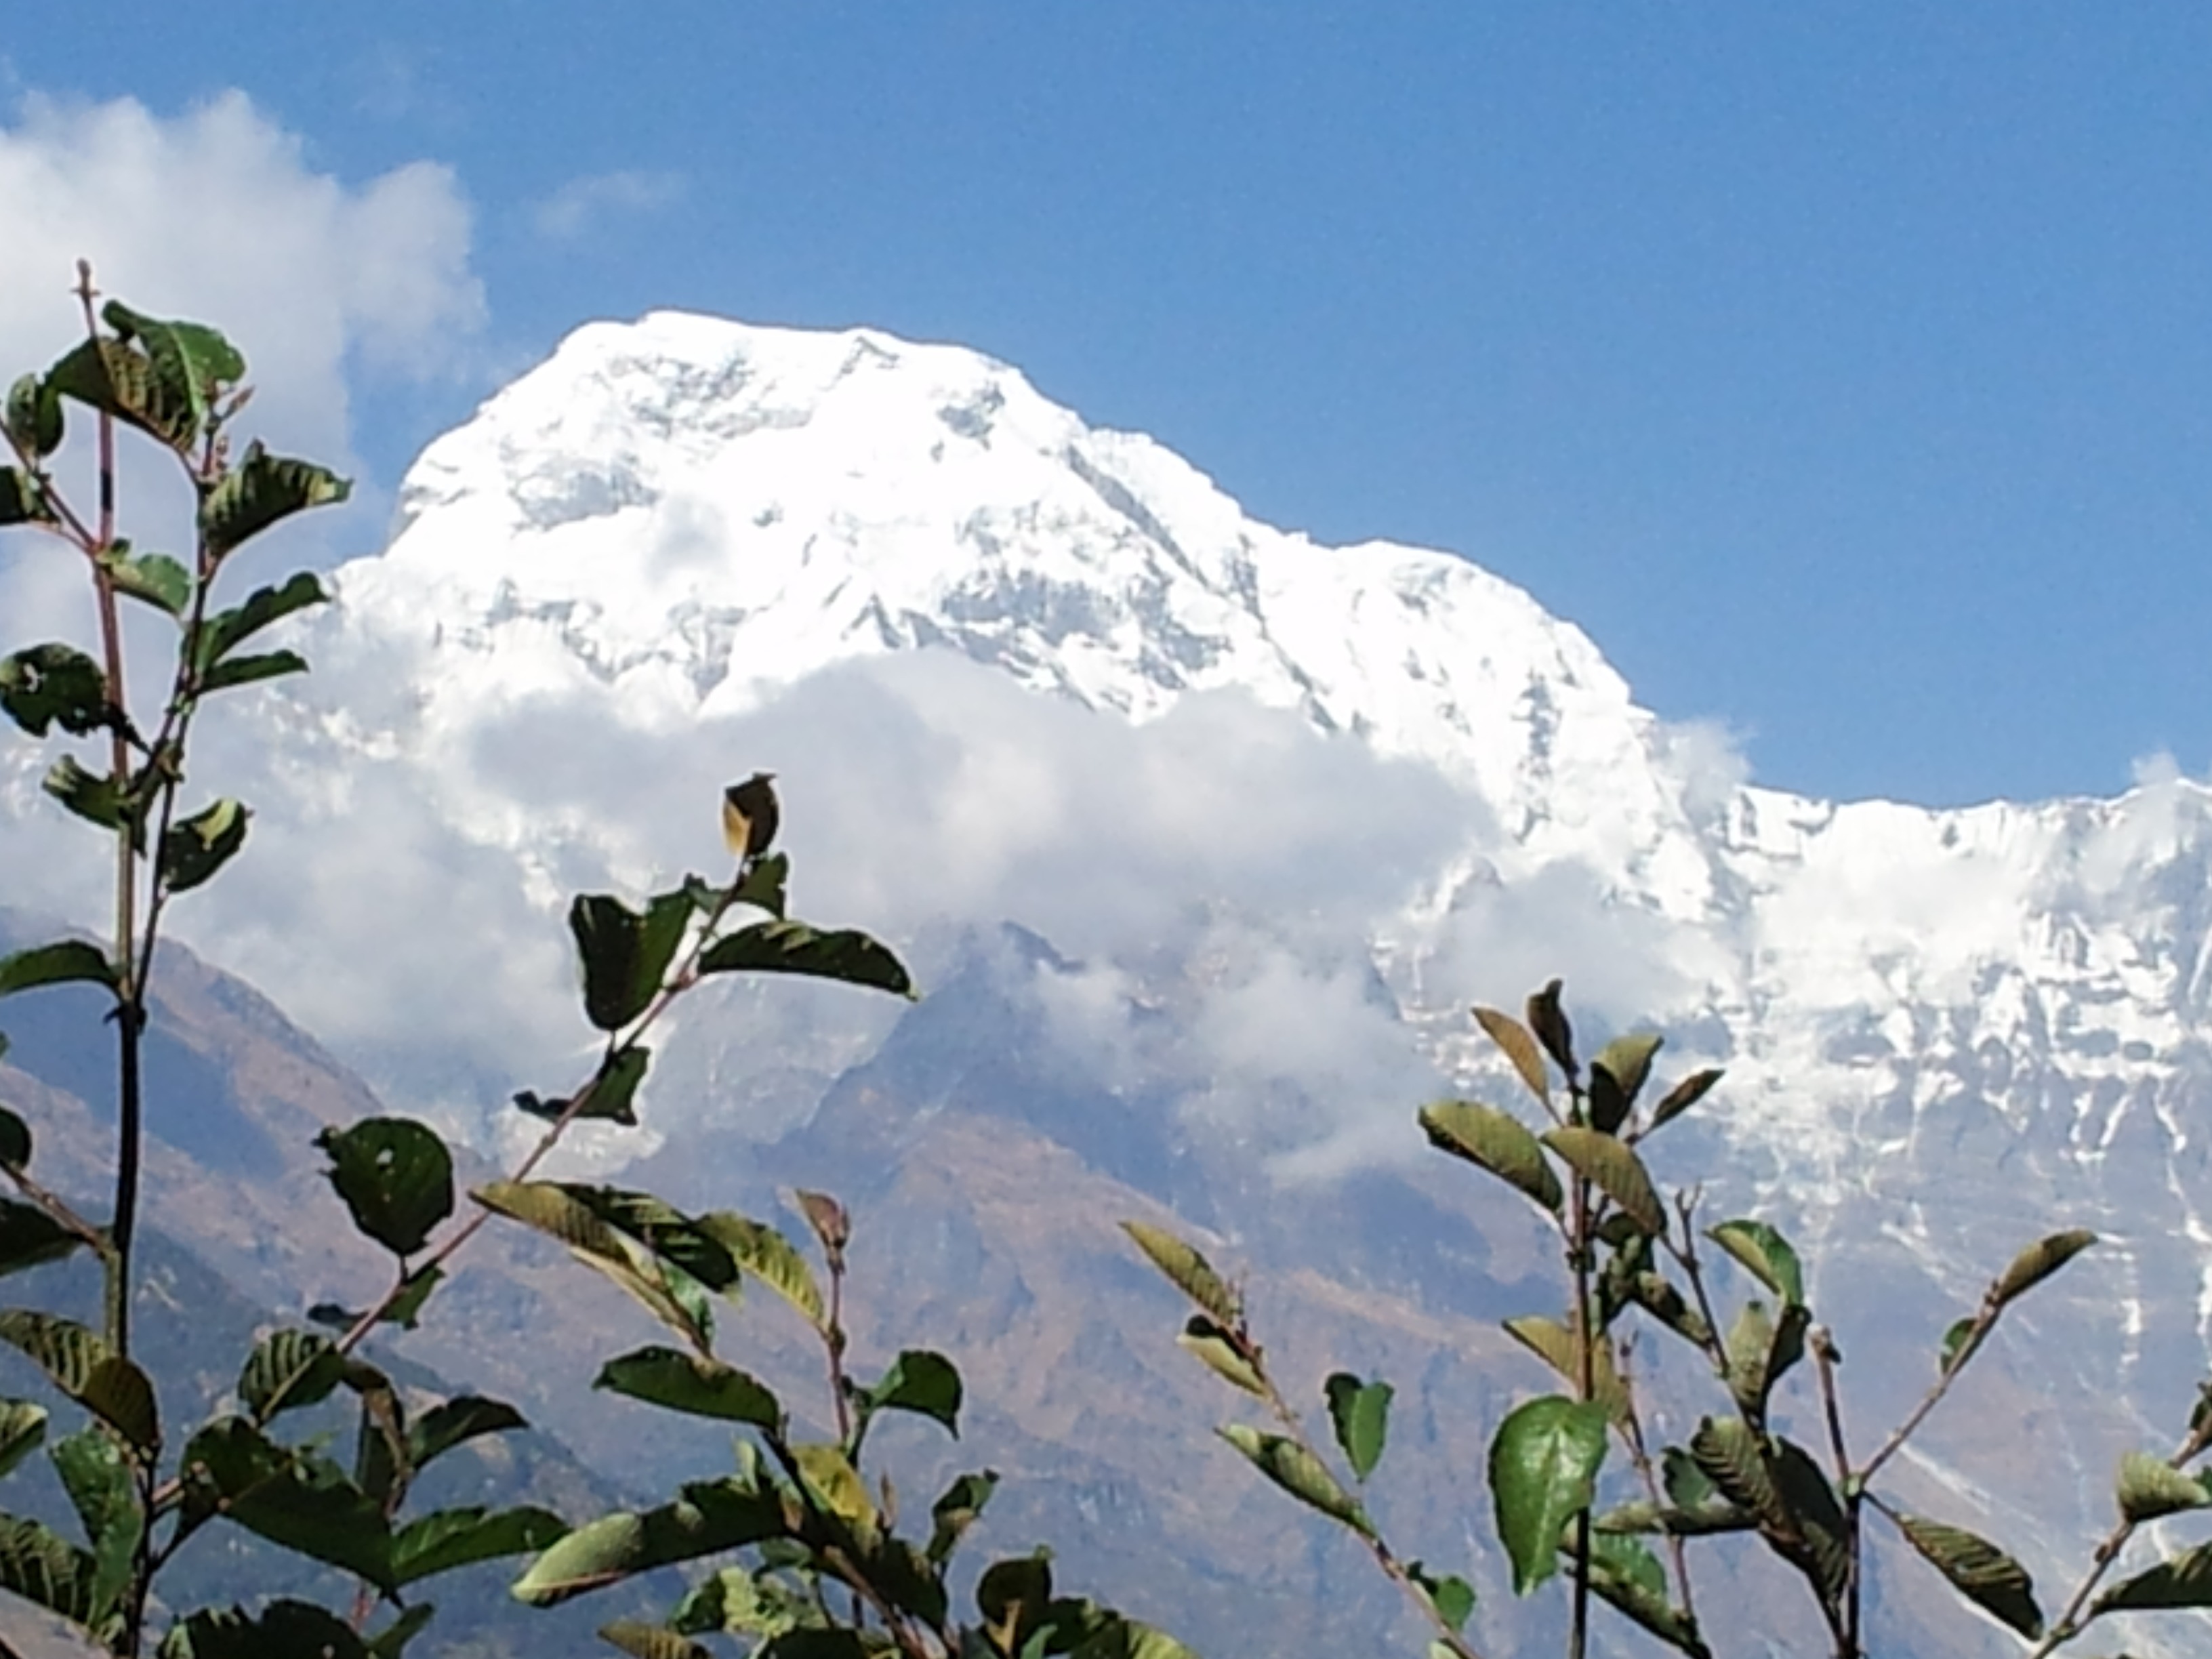 nepal, tracking, annapurna, sky, beauty in nature, mountain